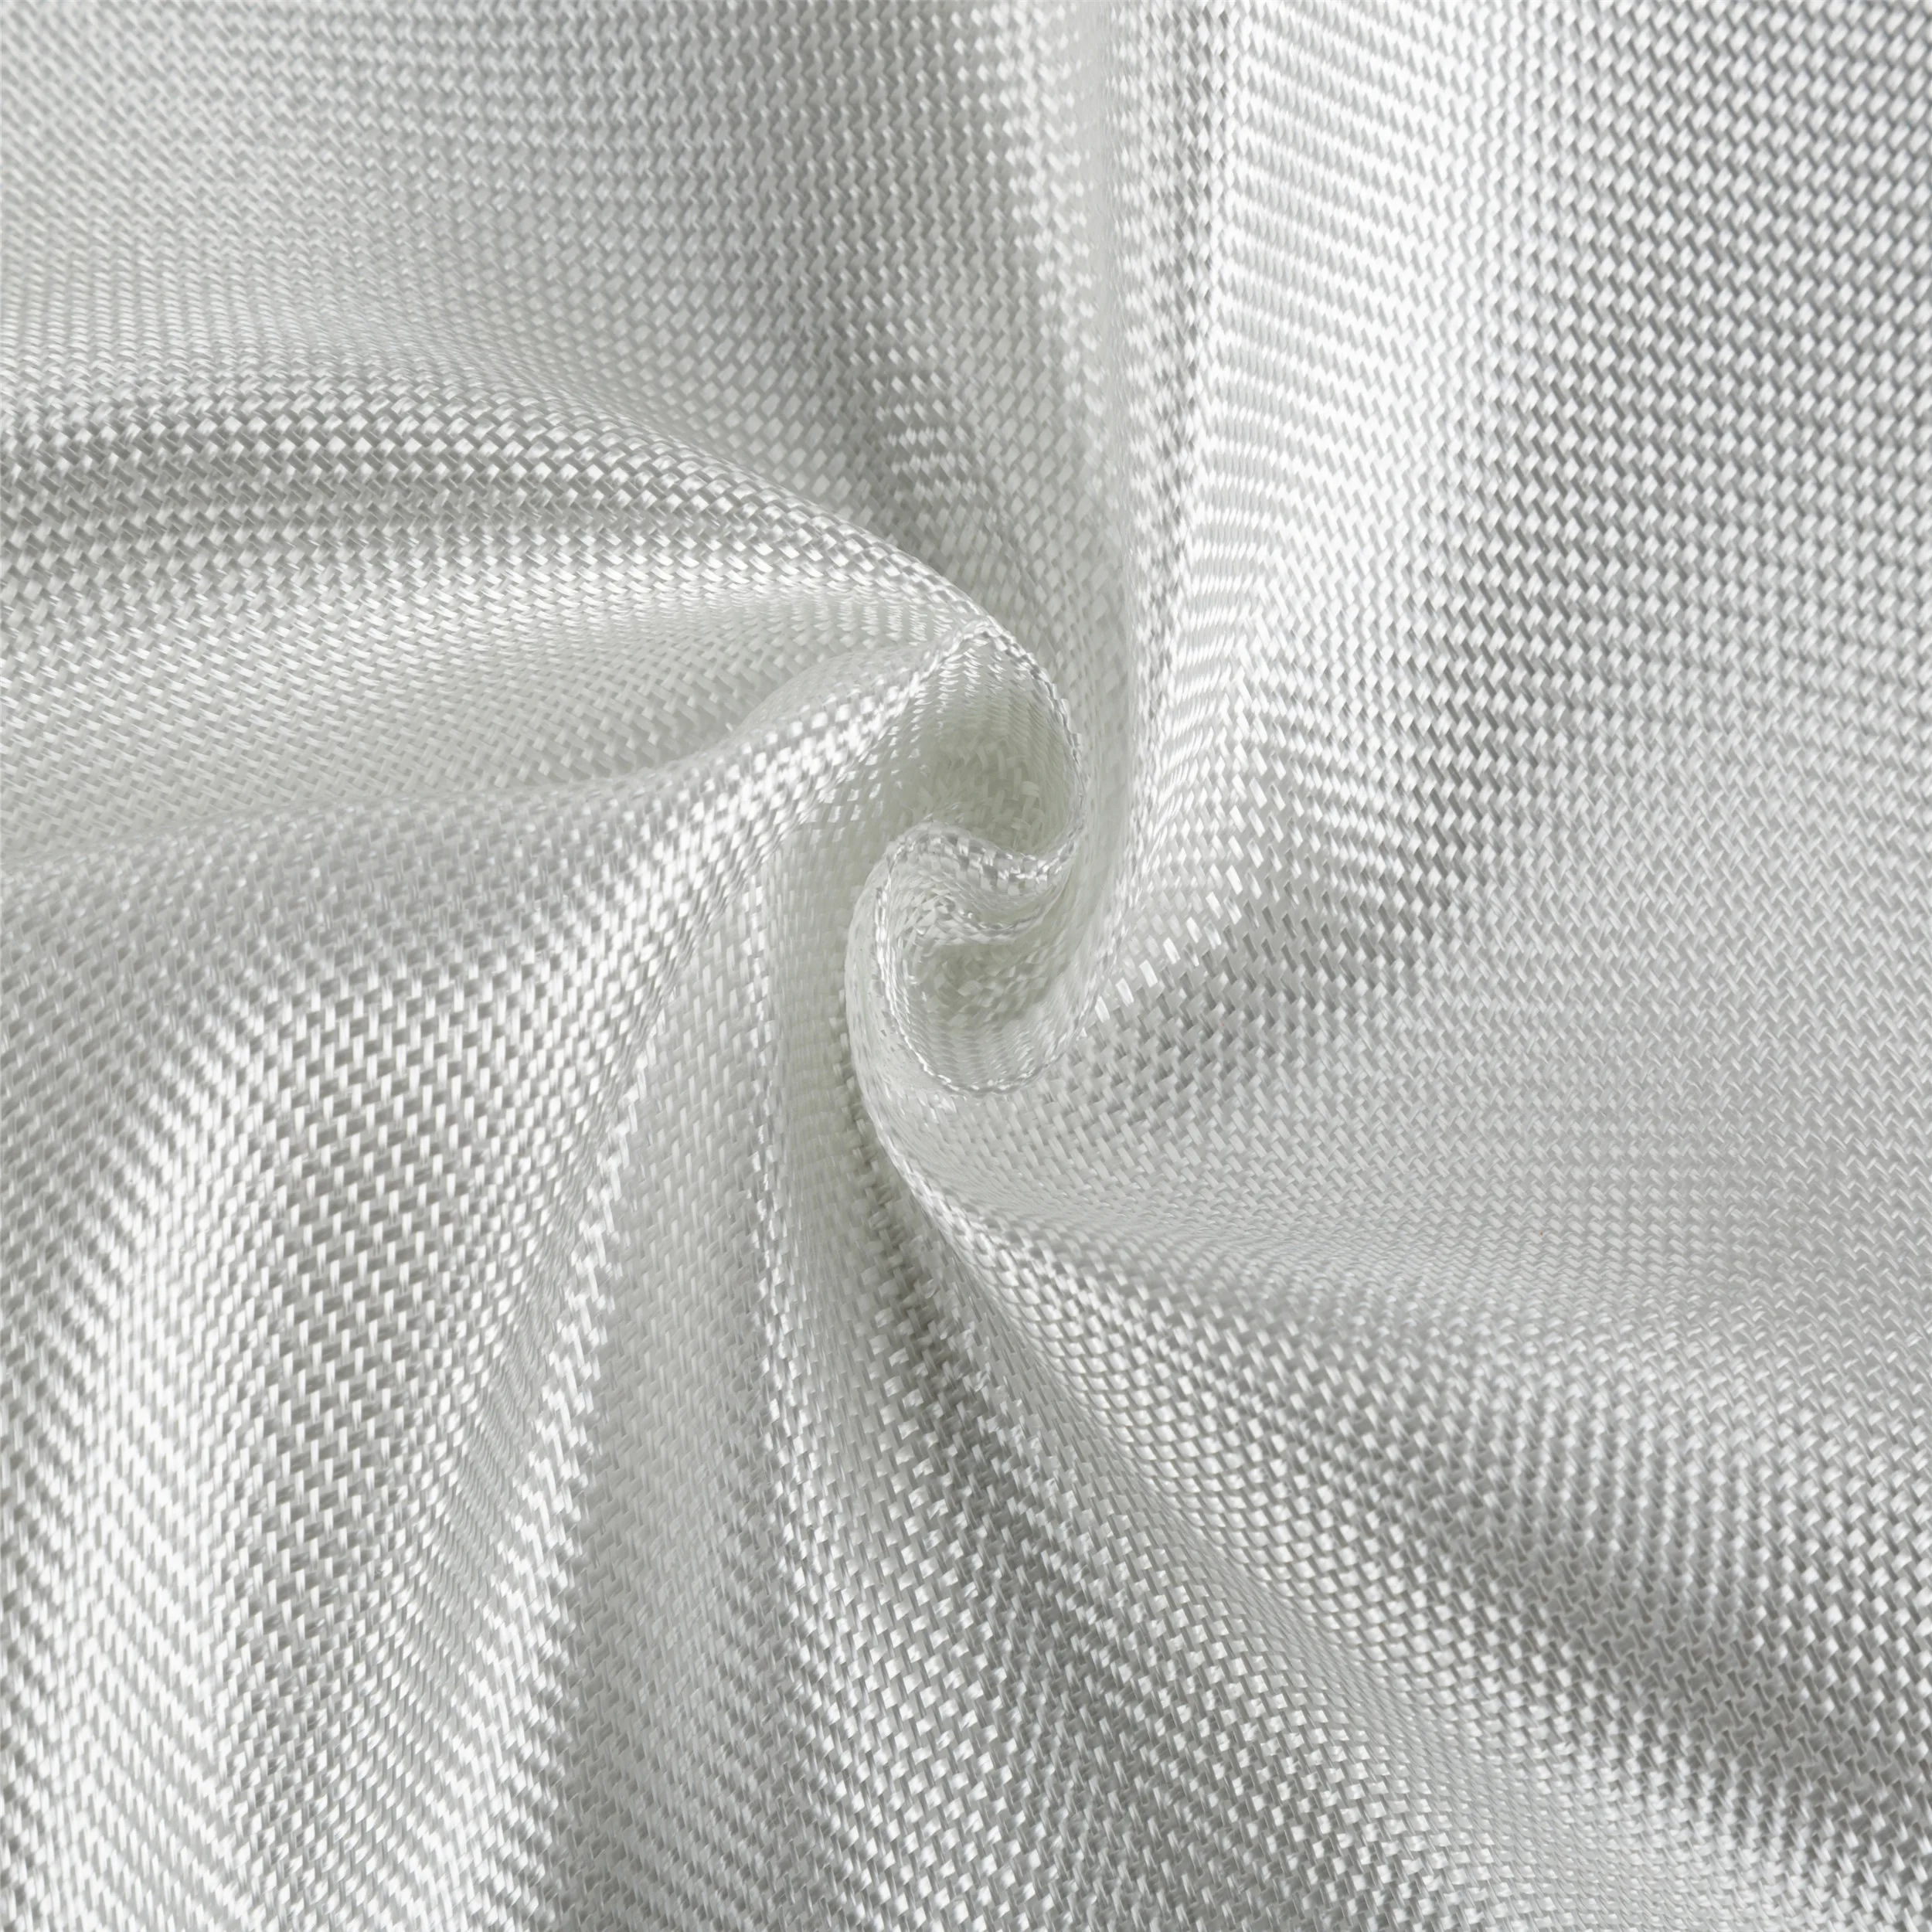 60" wide in 25' feet length Best quality Fiberglass Cloth Plain Weave 6oz 200g 